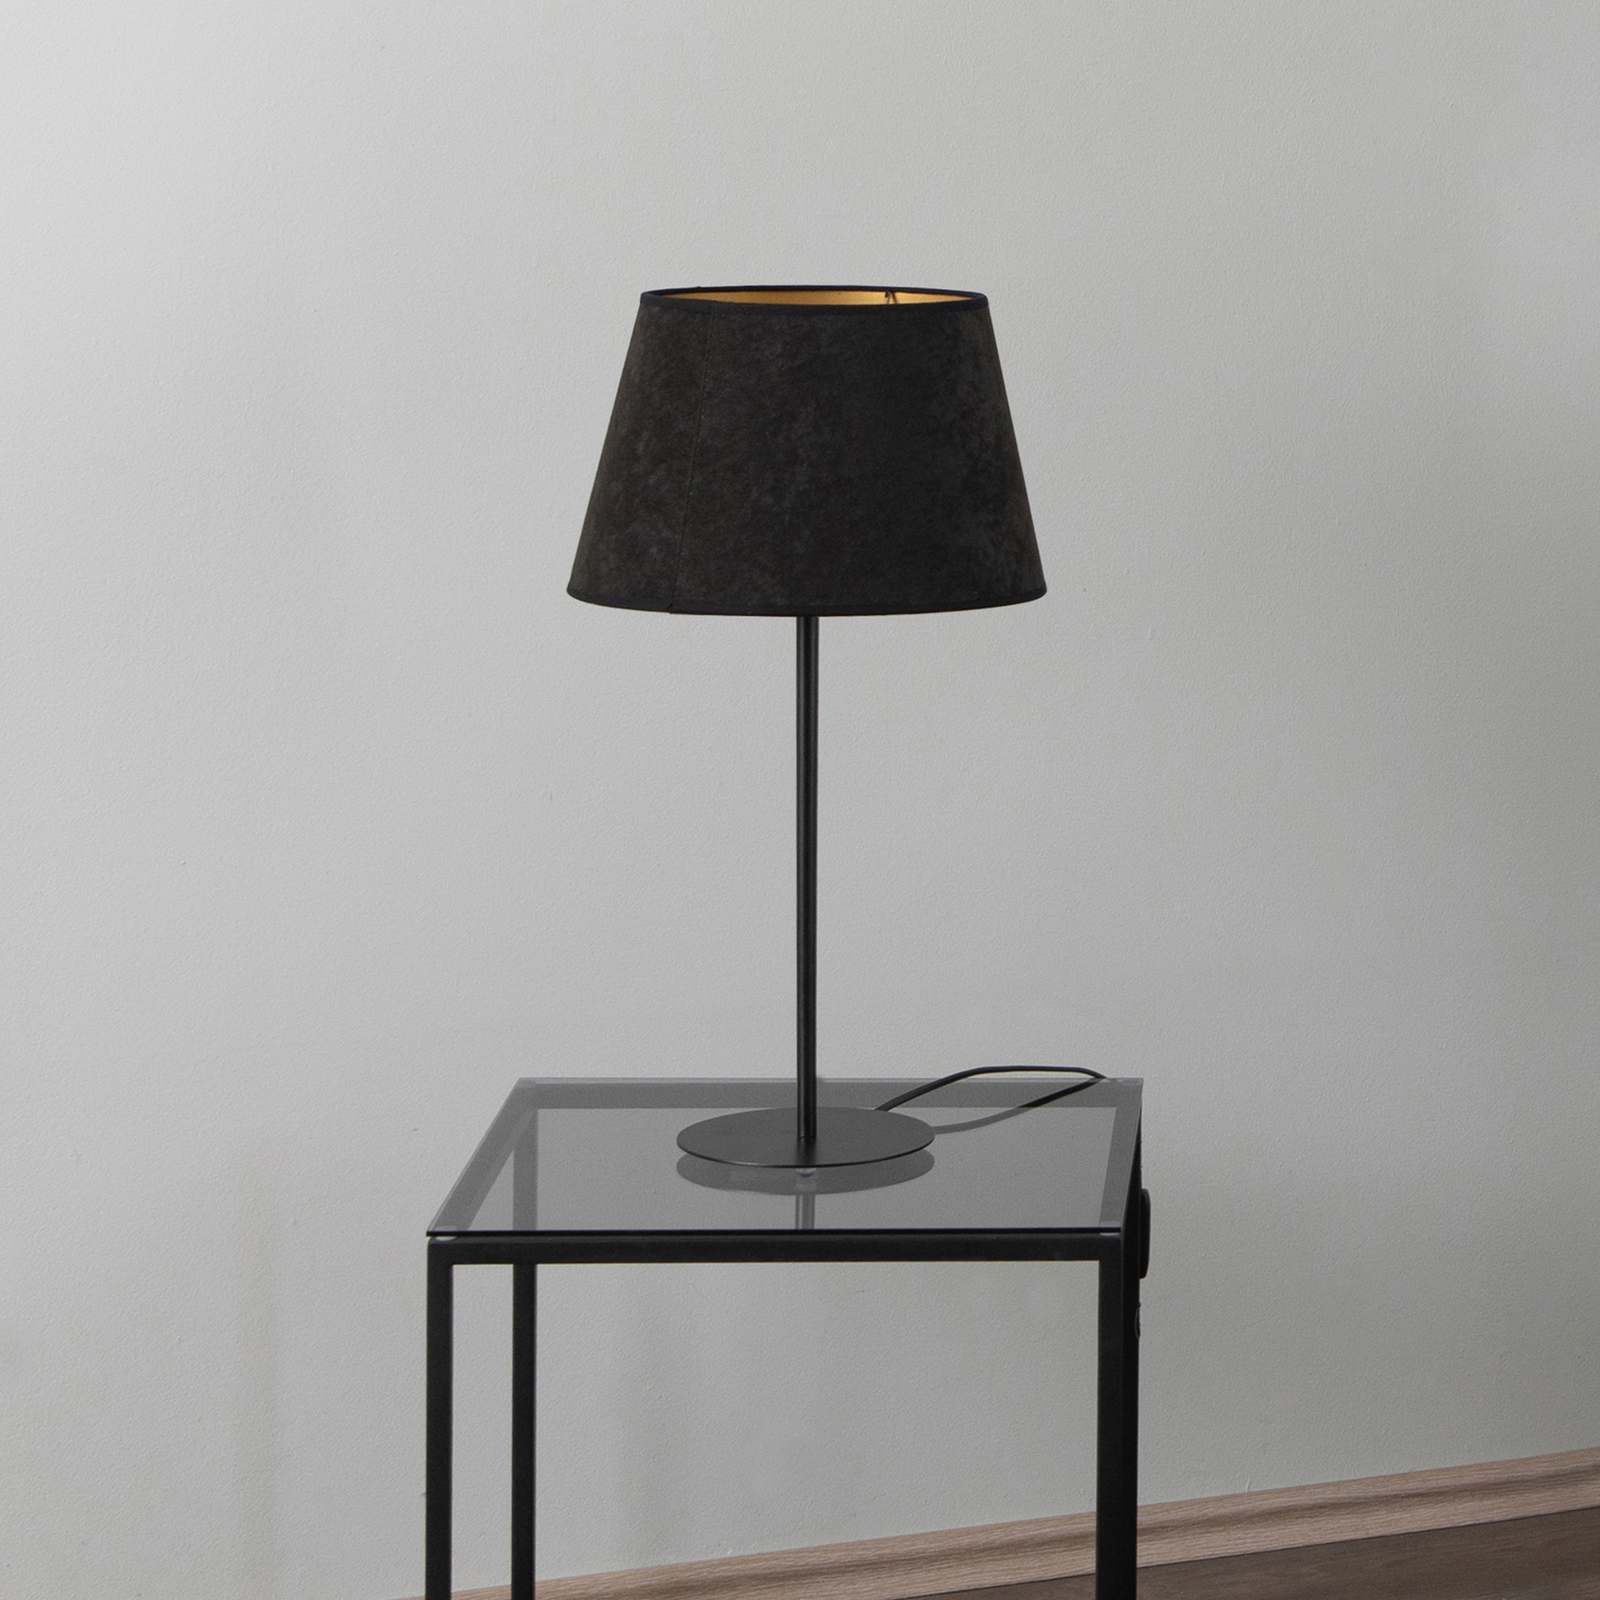 Cone lámpaernyő 18 cm magas, fekete/arany